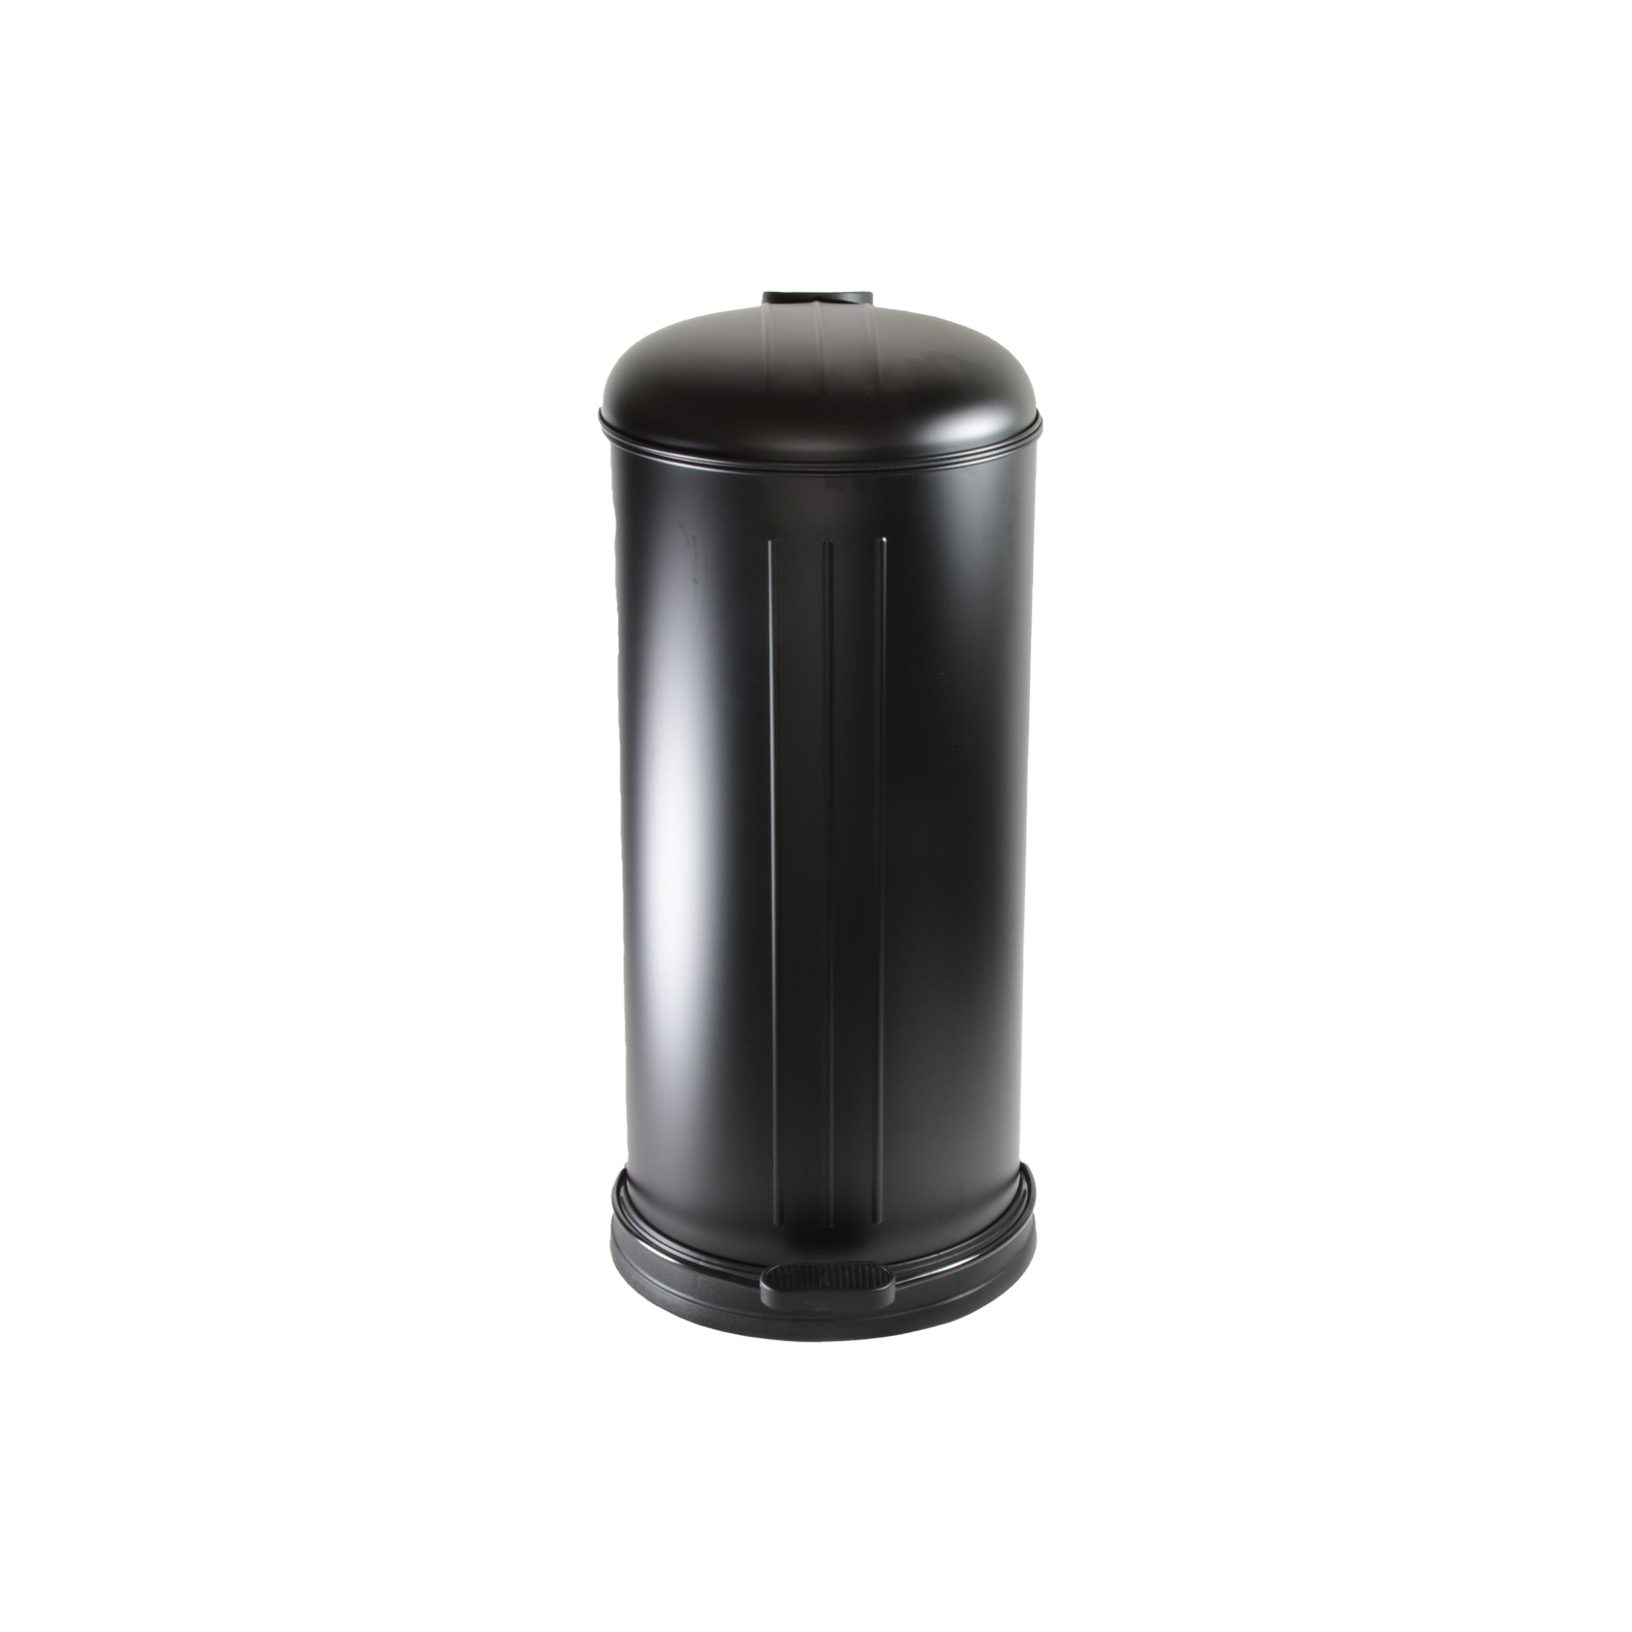 B&S Mülleimer 12 Liter Abfalleimer Treteimer Metall schwarz matt mit Absenkautomatik, mit Absenkautomatik